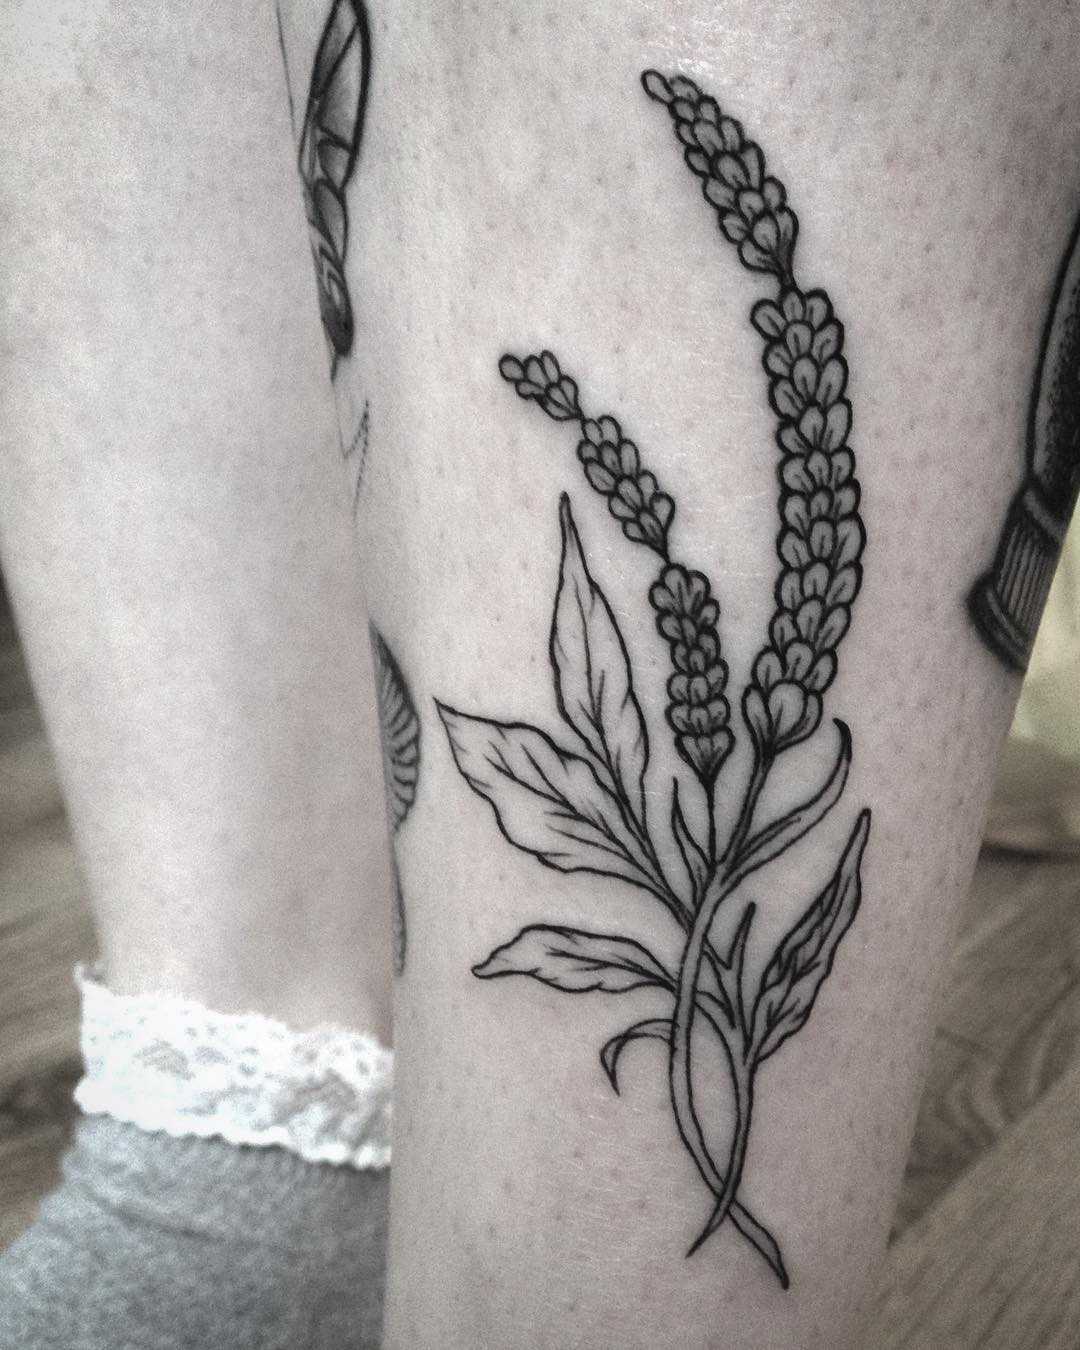 Sprigs tattoo on the shin